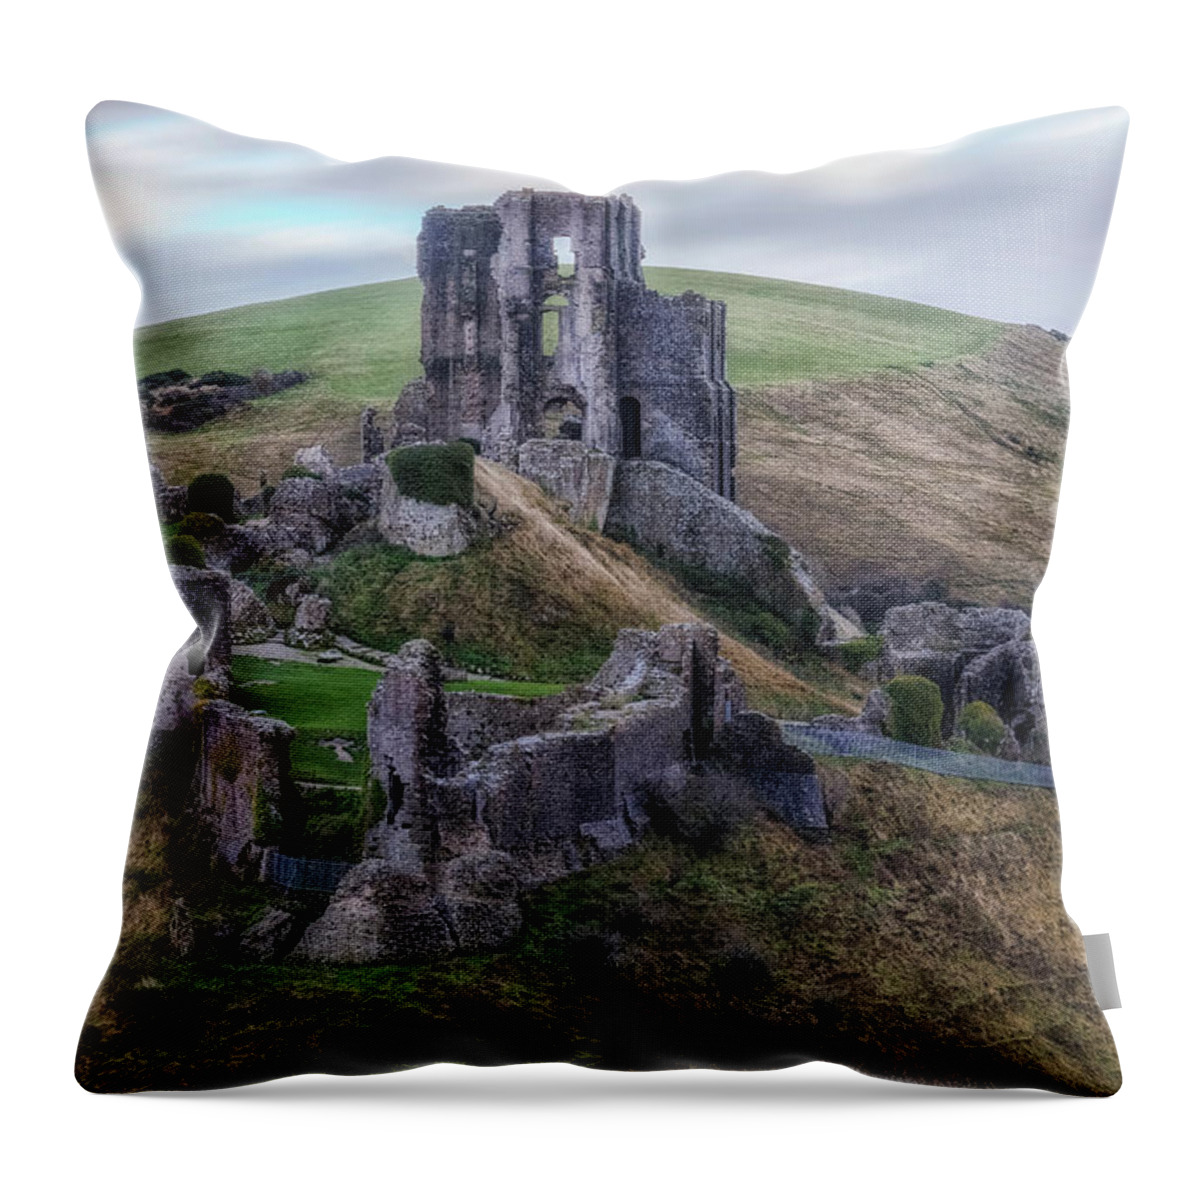 Corfe Castle Throw Pillow featuring the photograph Corfe Castle - England #2 by Joana Kruse